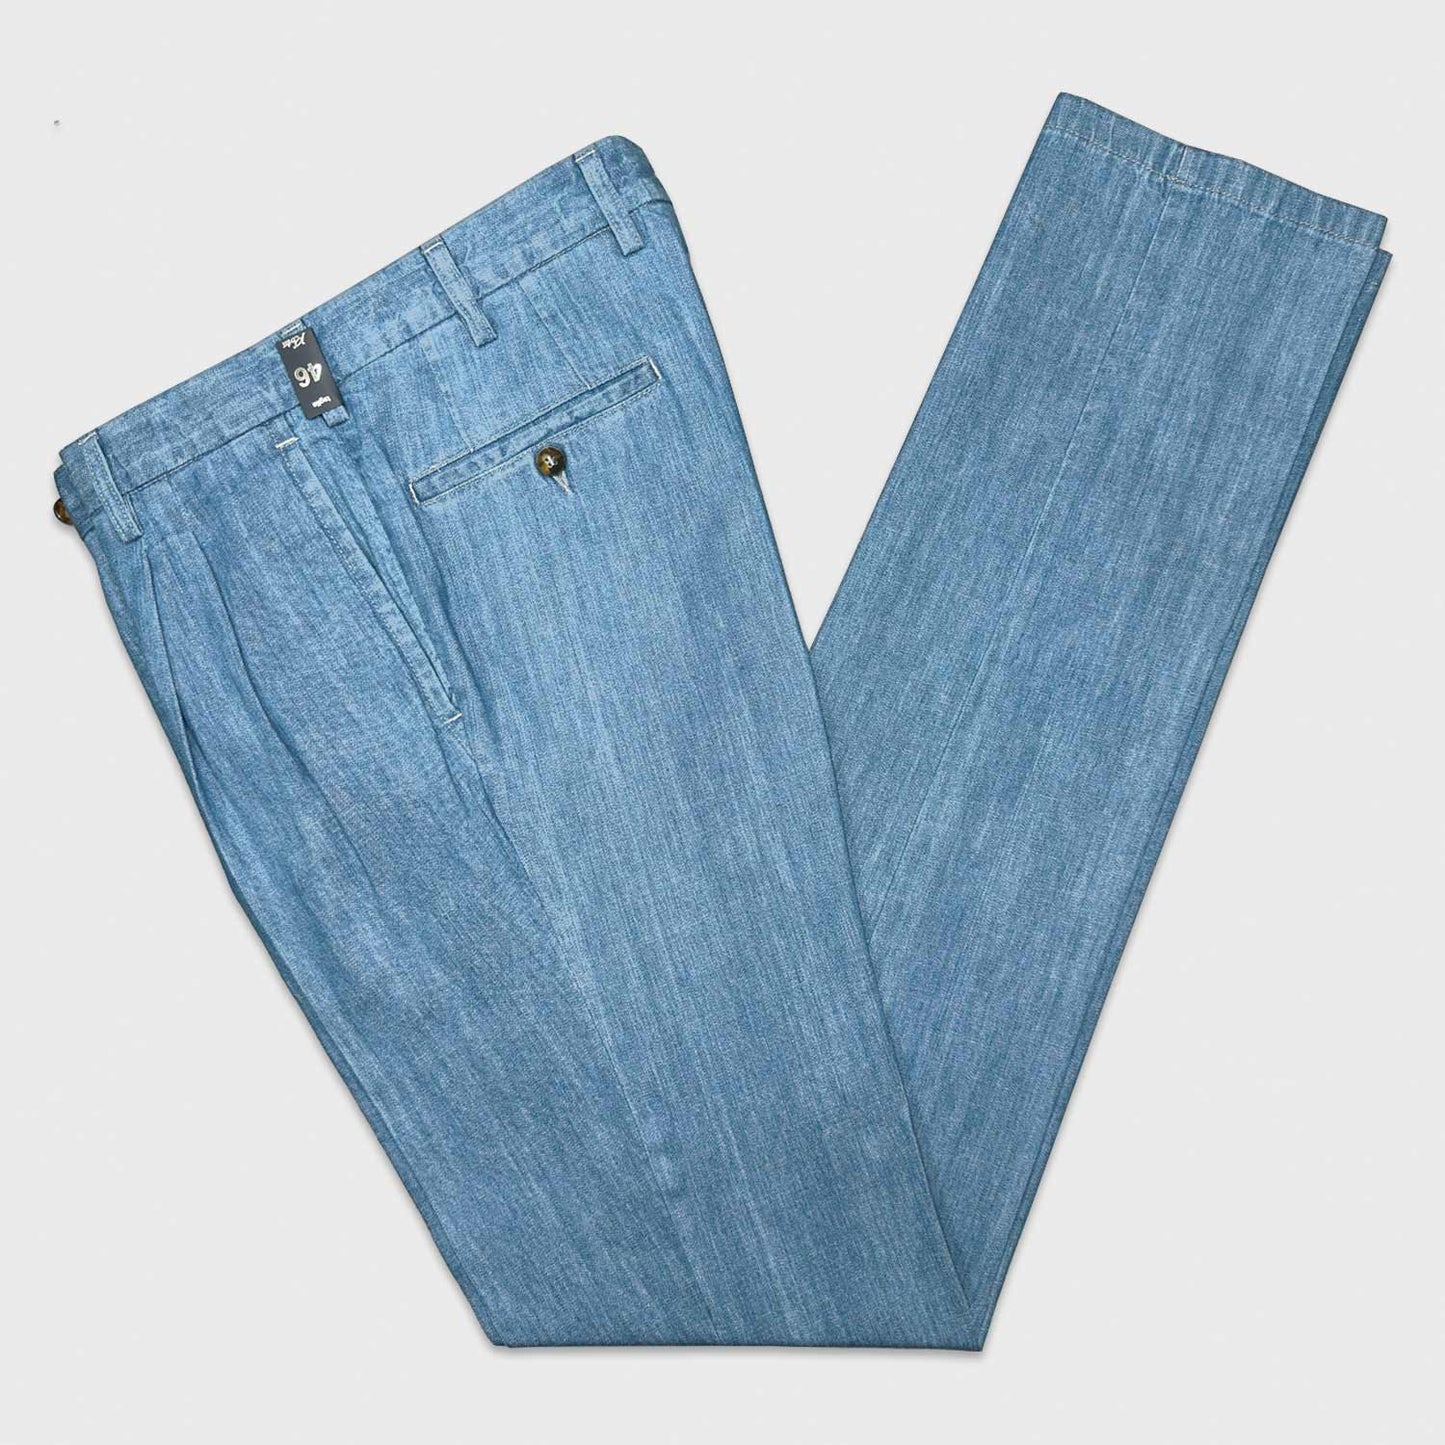 Light Blue Tailored Chambray Jeans Canvas Kurabo. Rotasport by Rota pantaloni, handmade in Italy with a soft and refined Japanese Kurabo denim fabric.